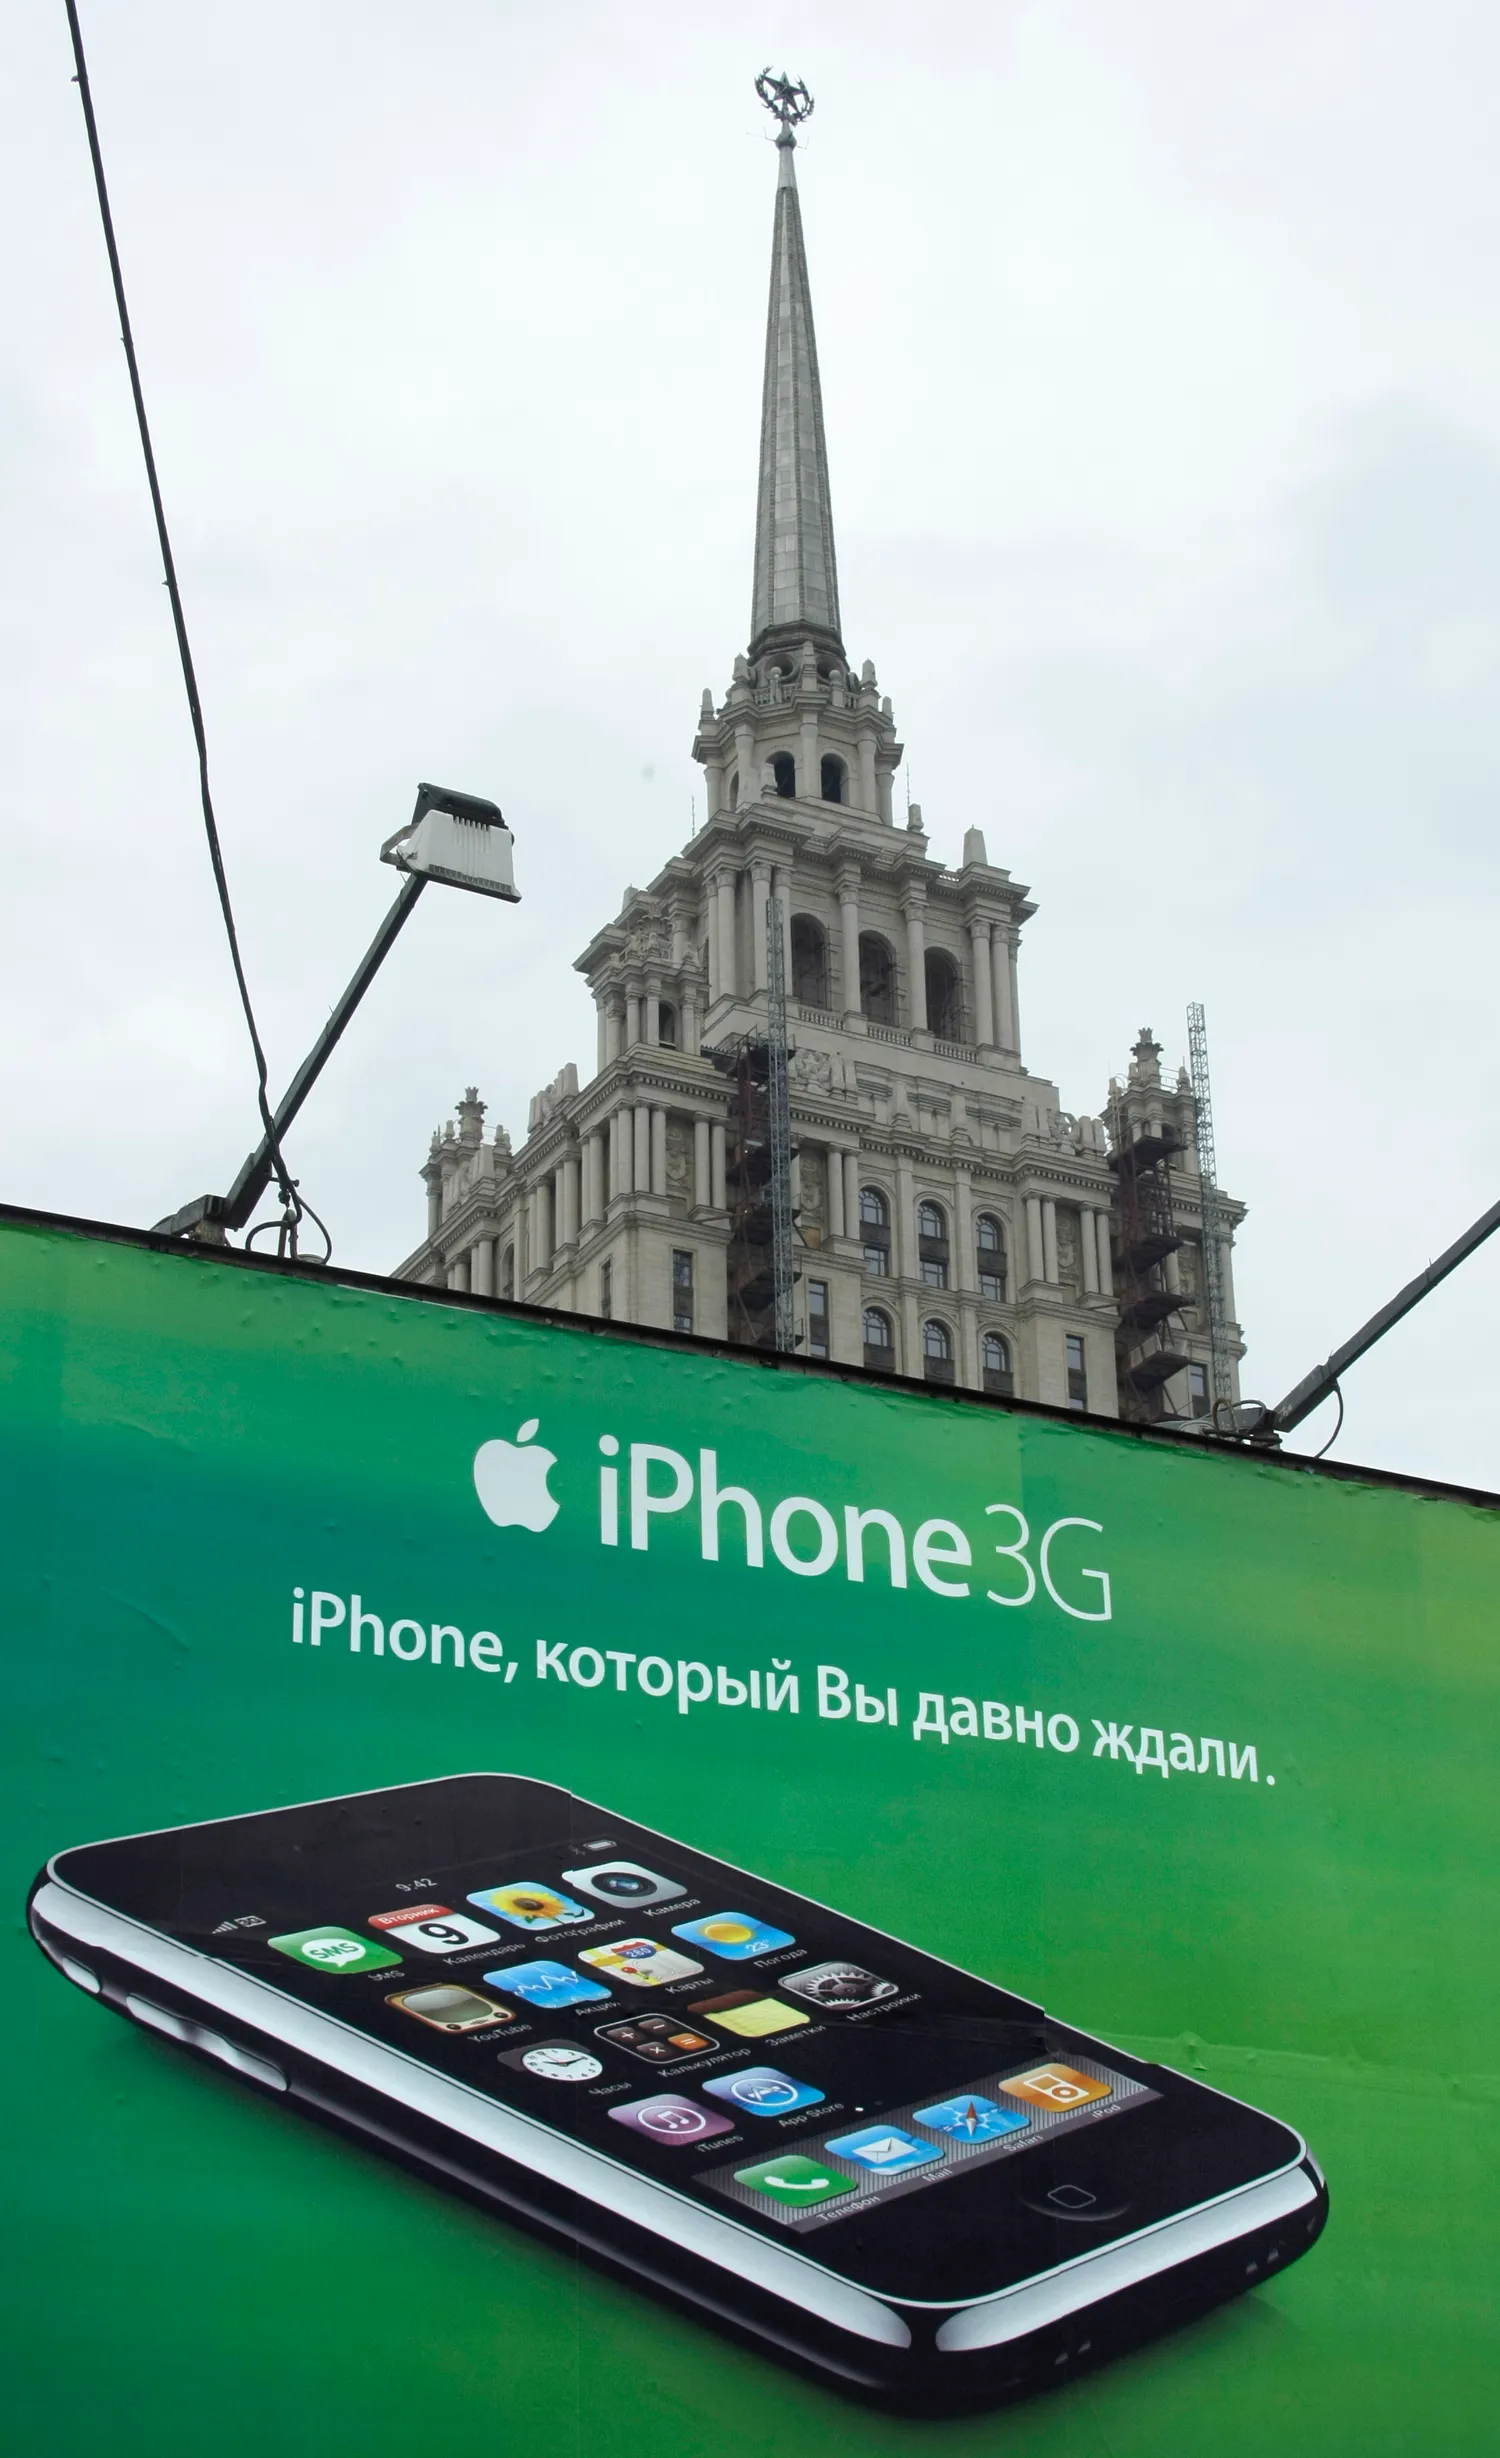 Продажи iPhone 3G начались с Камчатки